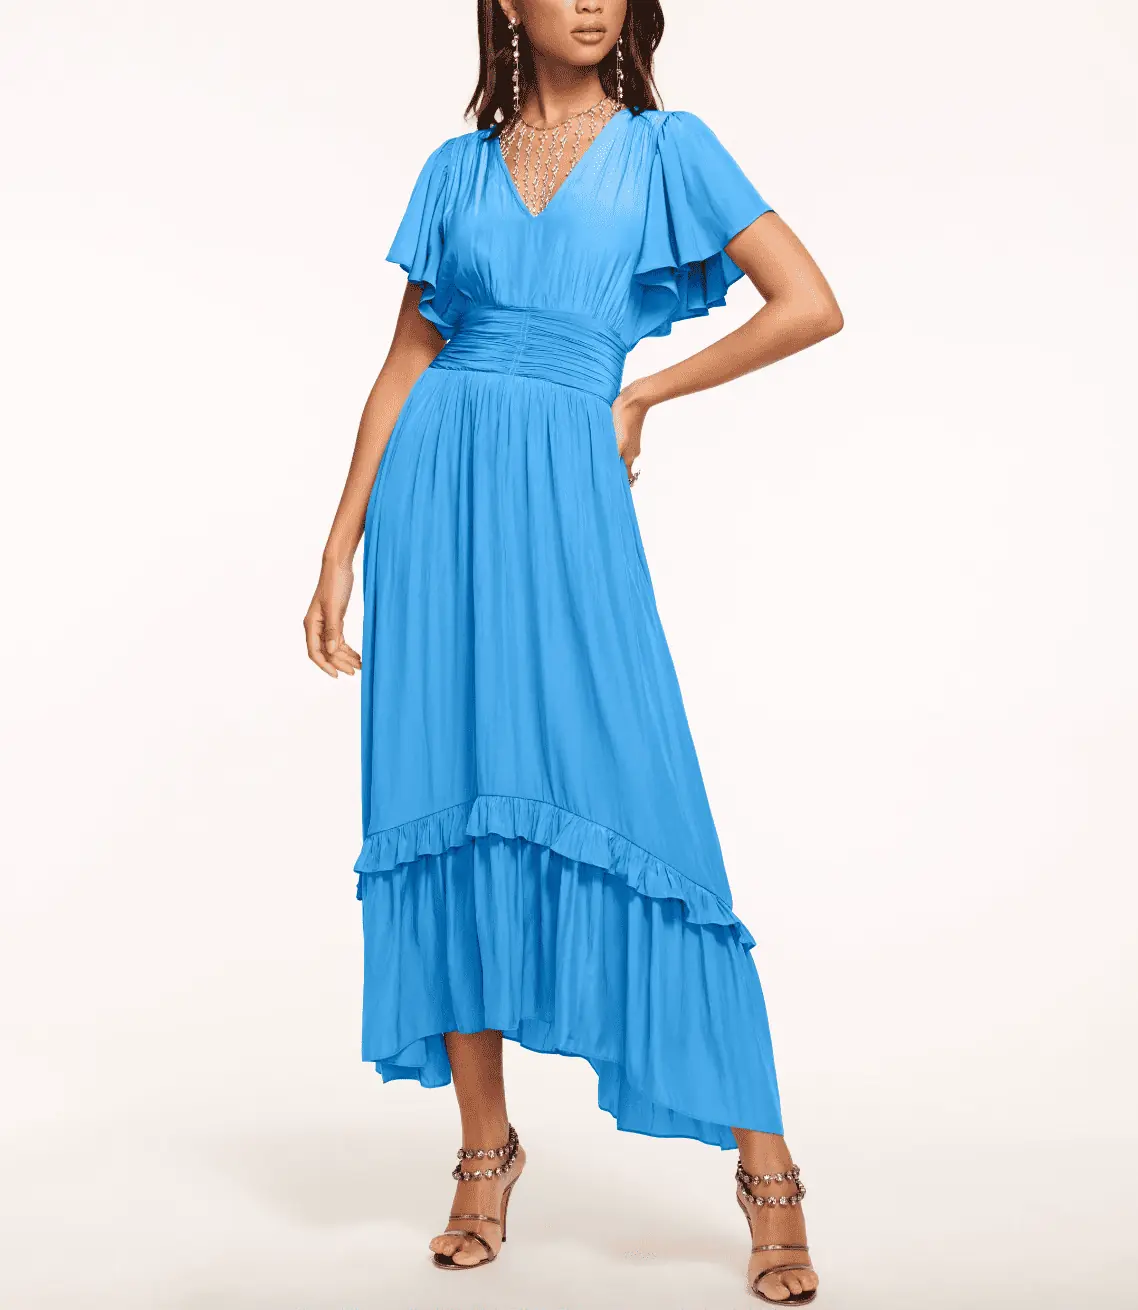 Dolores Catania's Blue Maxi Dress